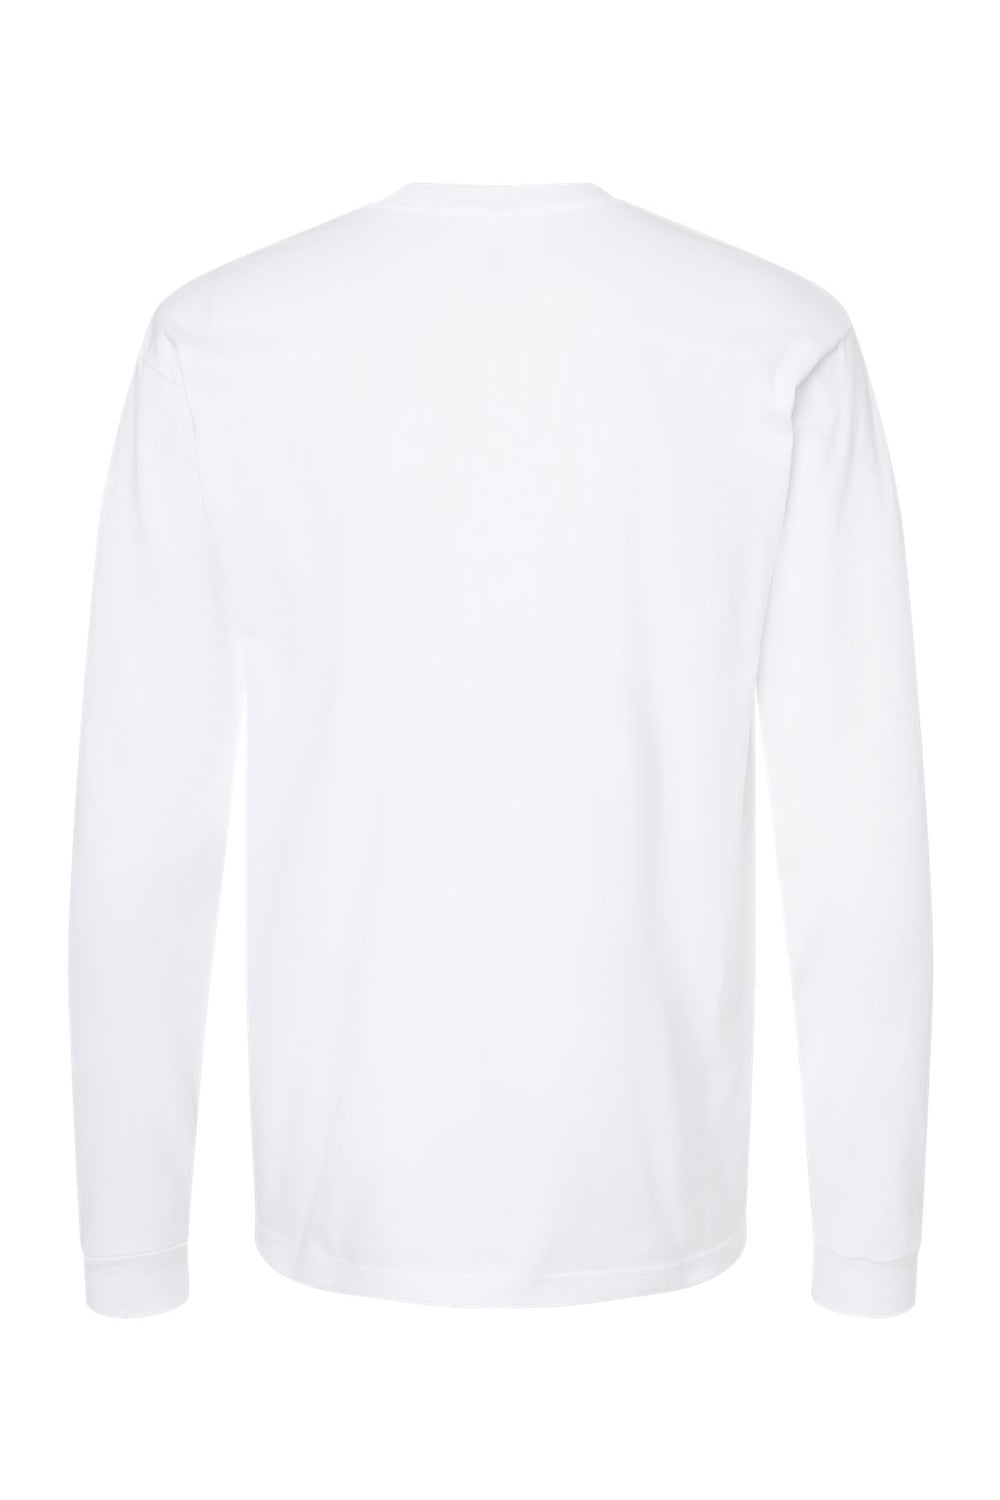 Tultex 291 Mens Jersey Long Sleeve Crewneck T-Shirt White Flat Back